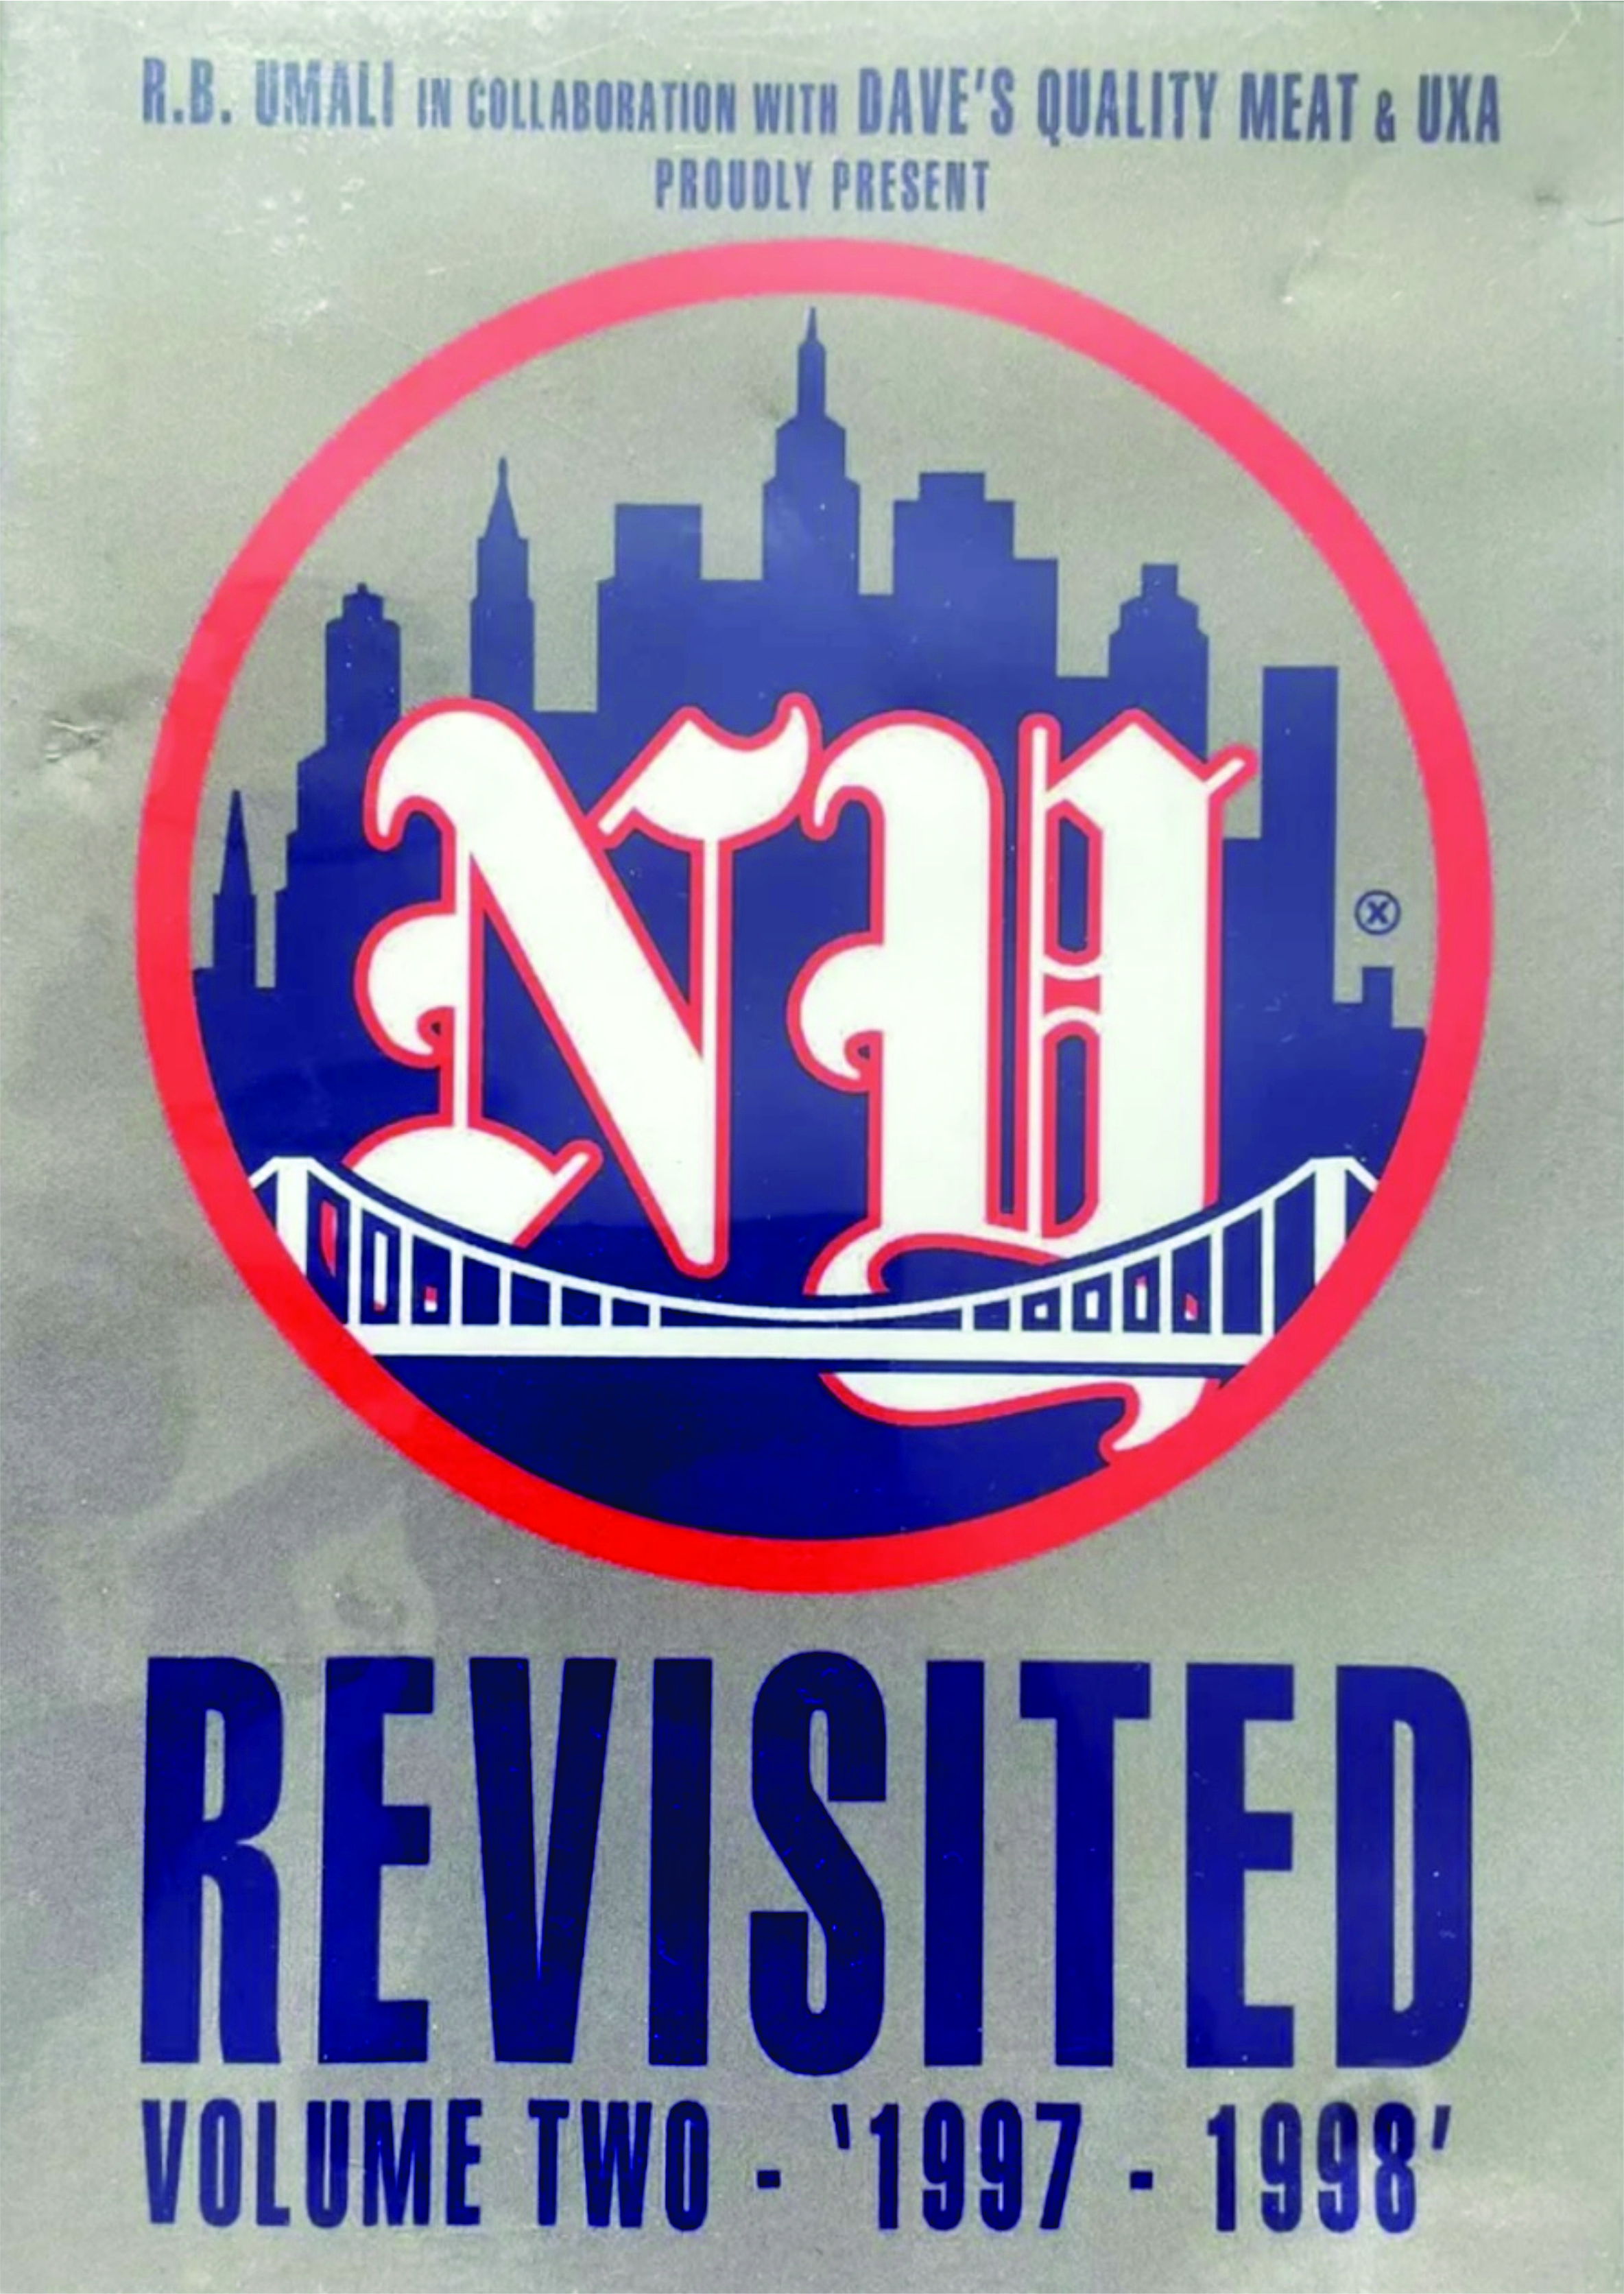 R. B. Umali NY Revisited Vol 2 (97-98) cover art